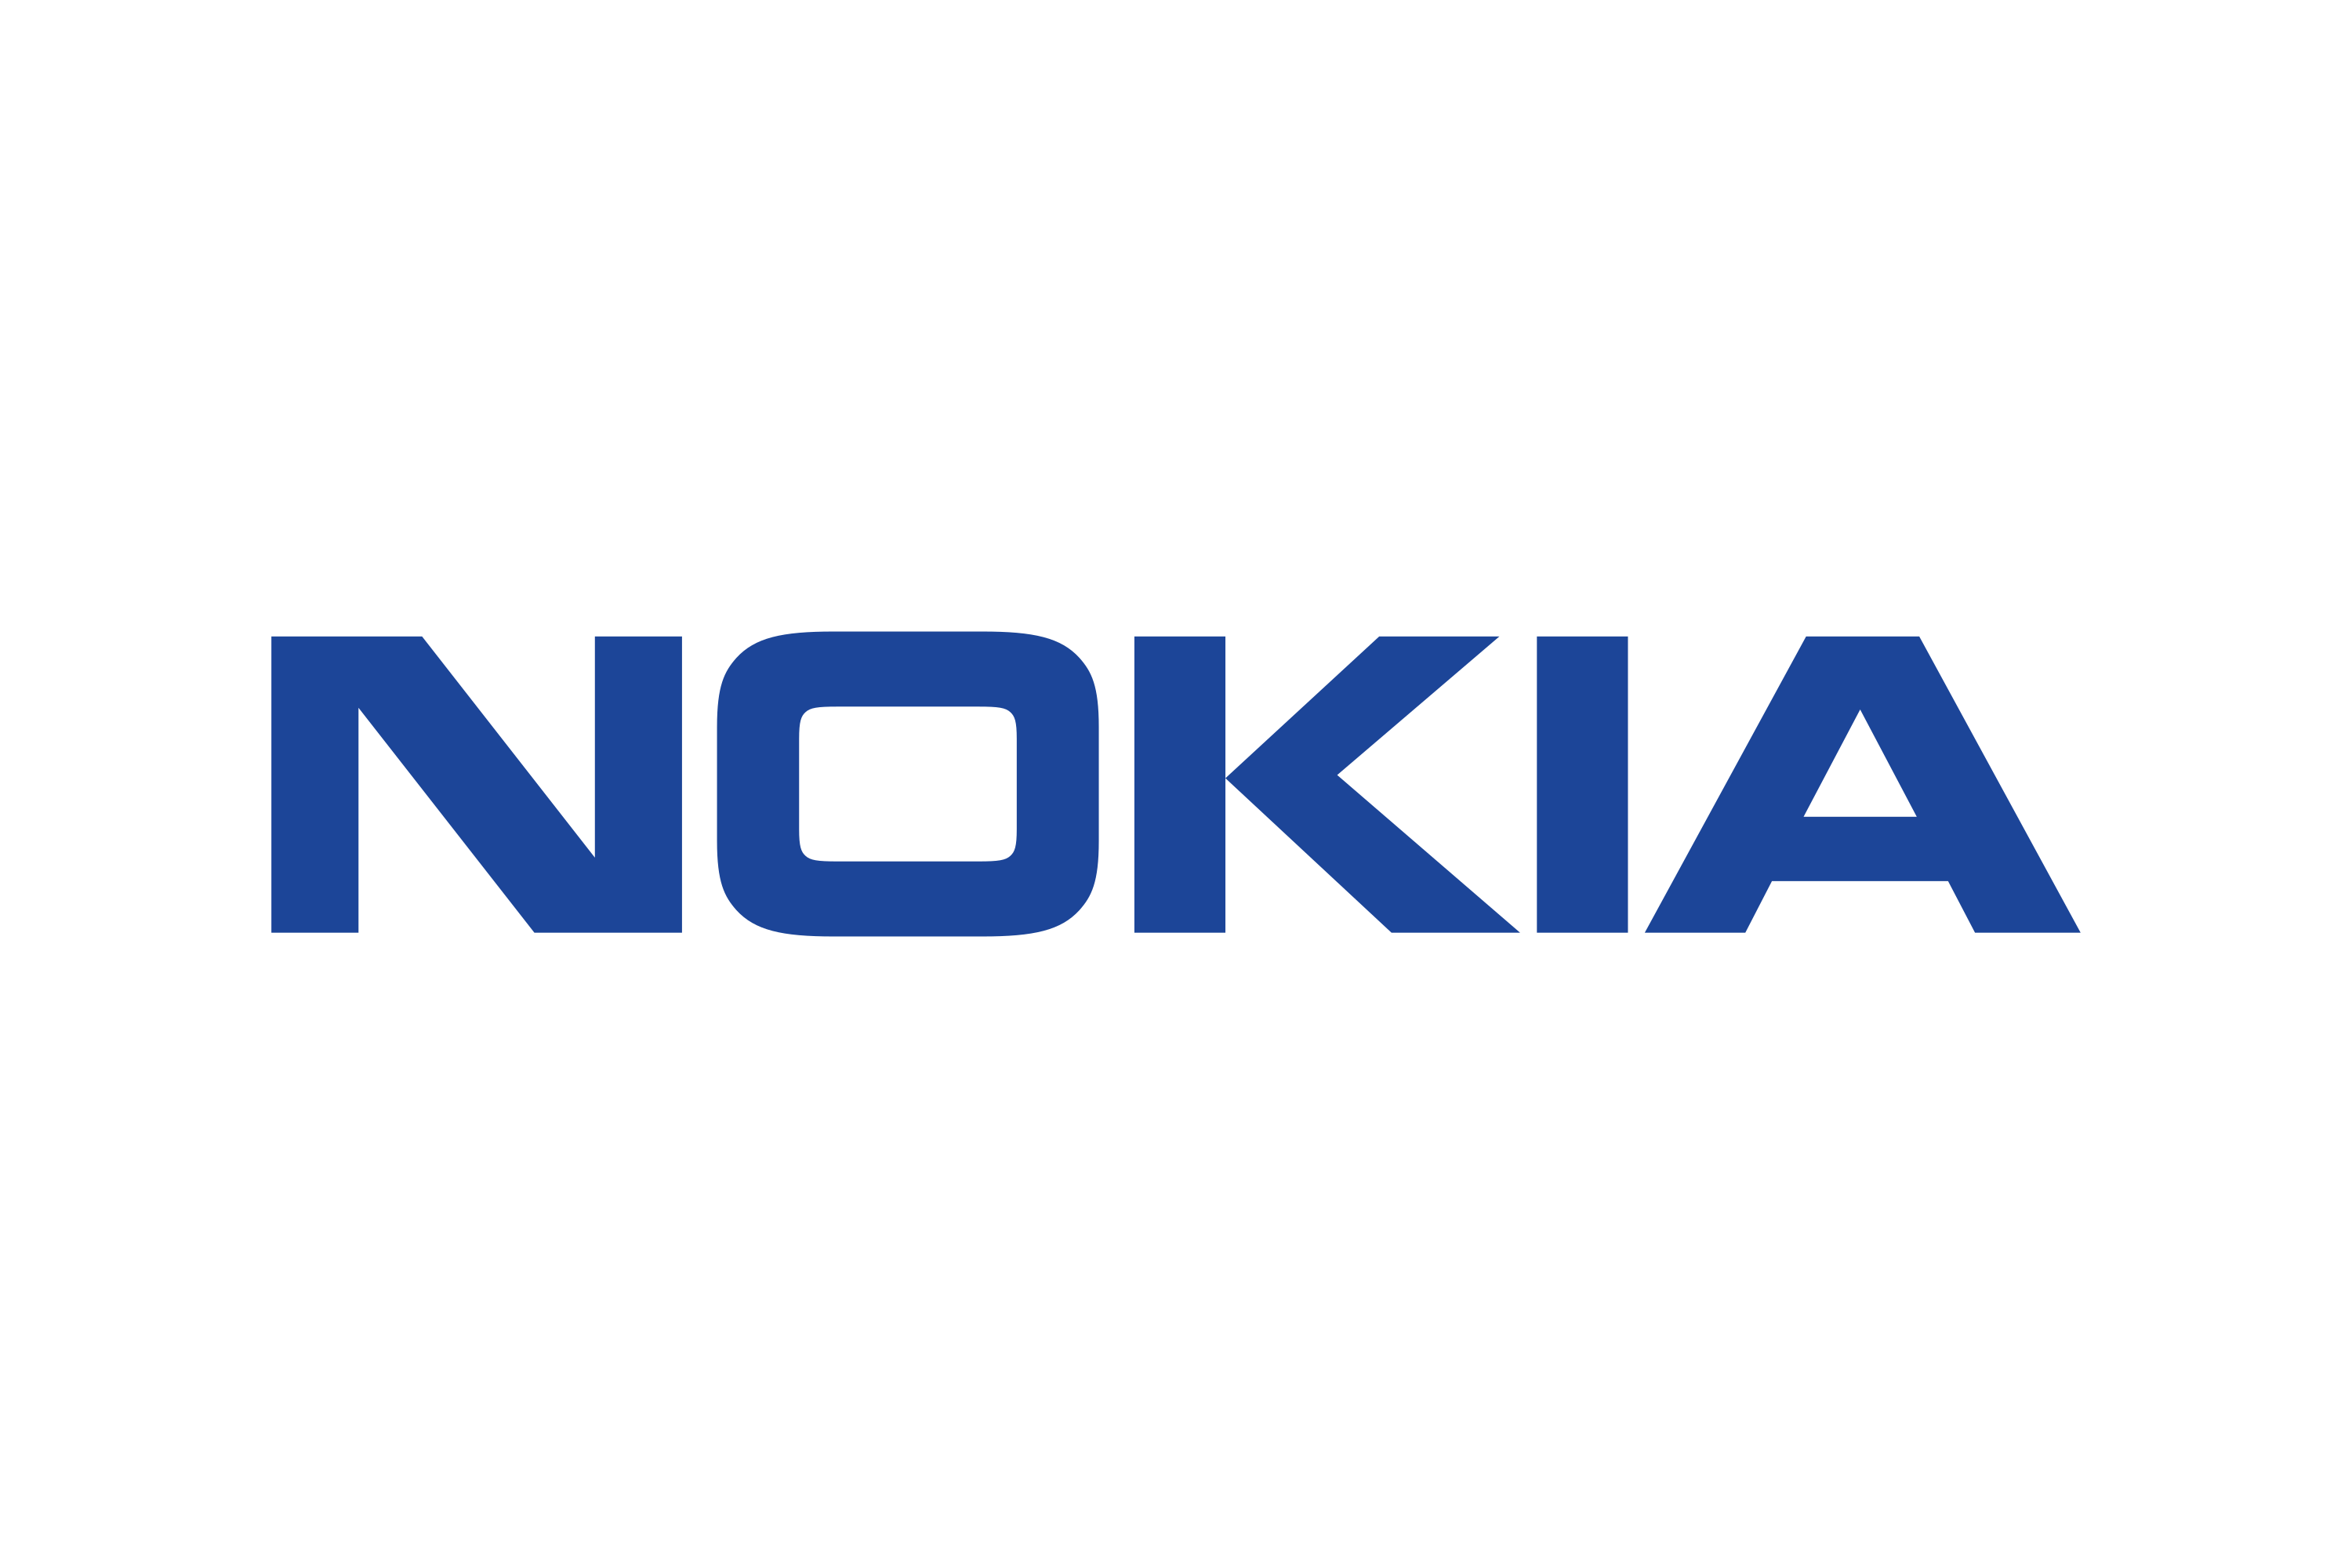 Nokia 2 V Tella Hard Reset Guide [Wipe All Data]